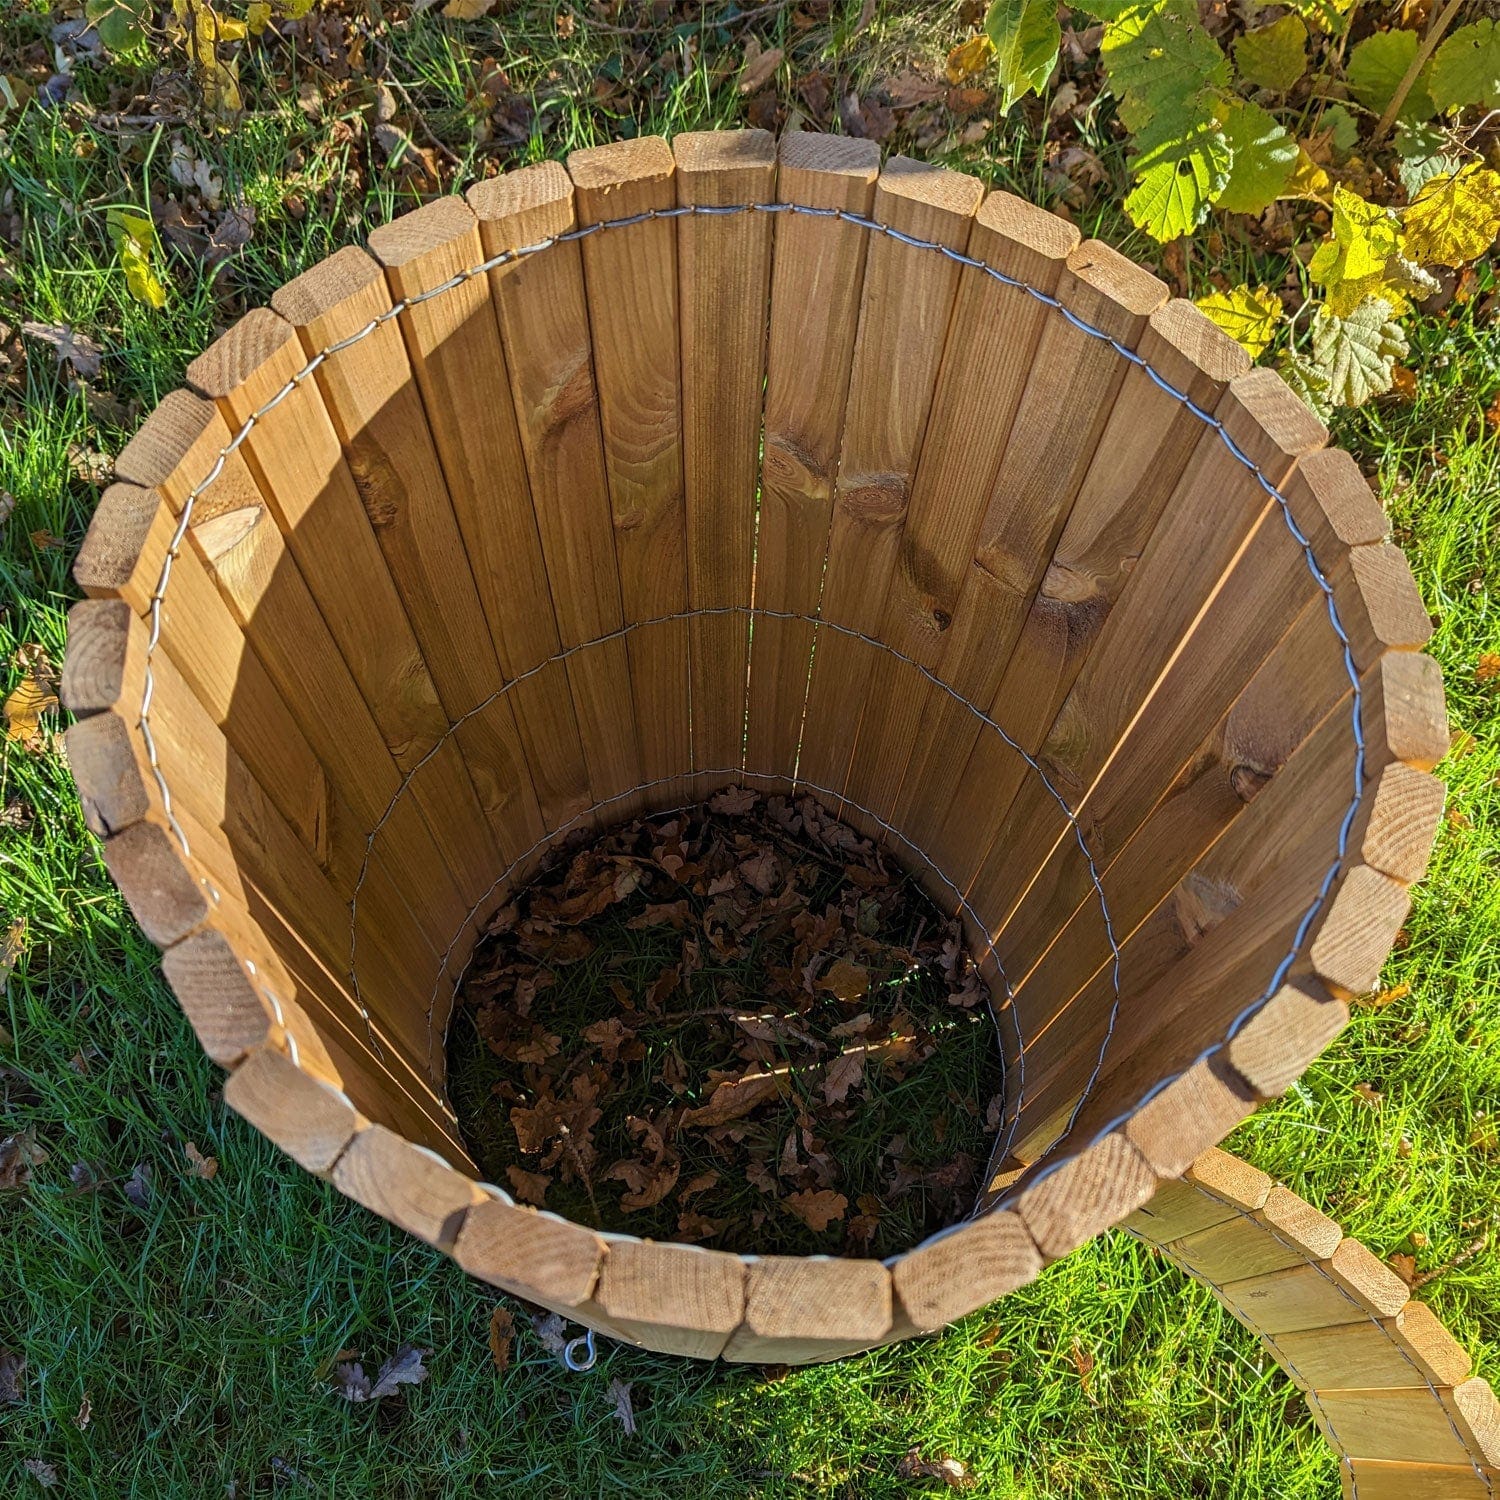 Grow your own potatoes with this premium potato barrel